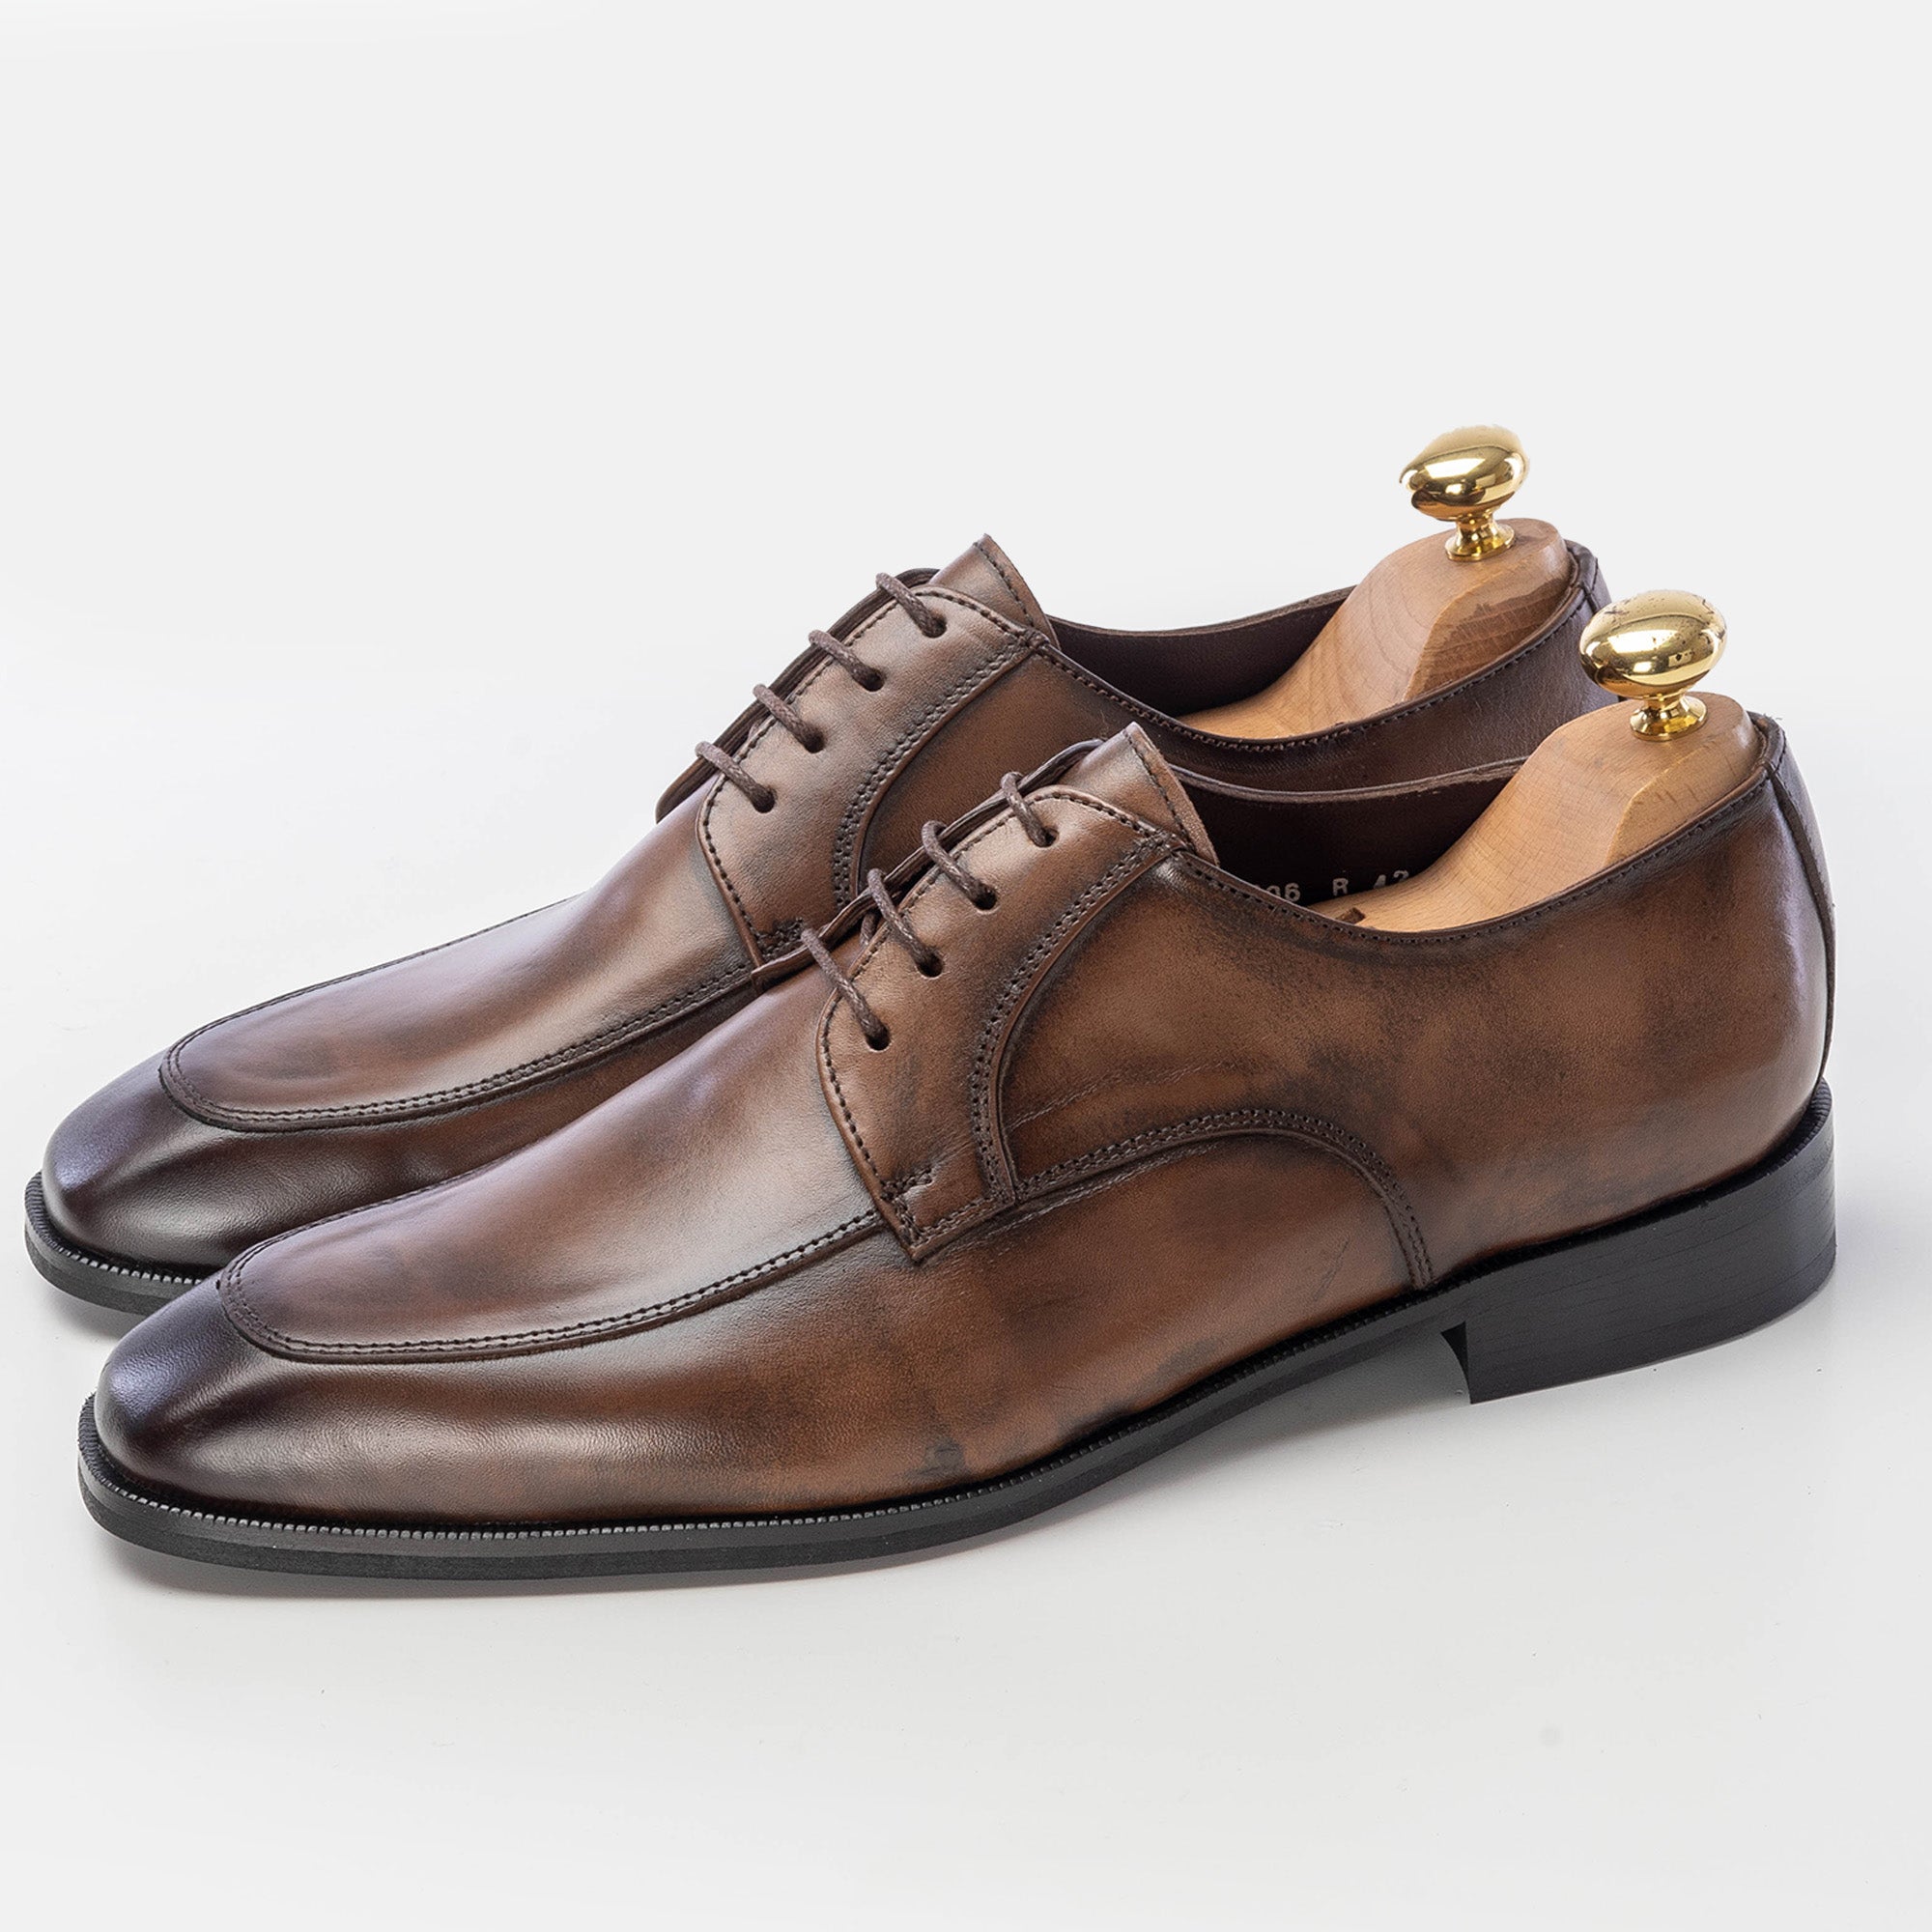 ''1306 Chaussure en cuir Marron vintage